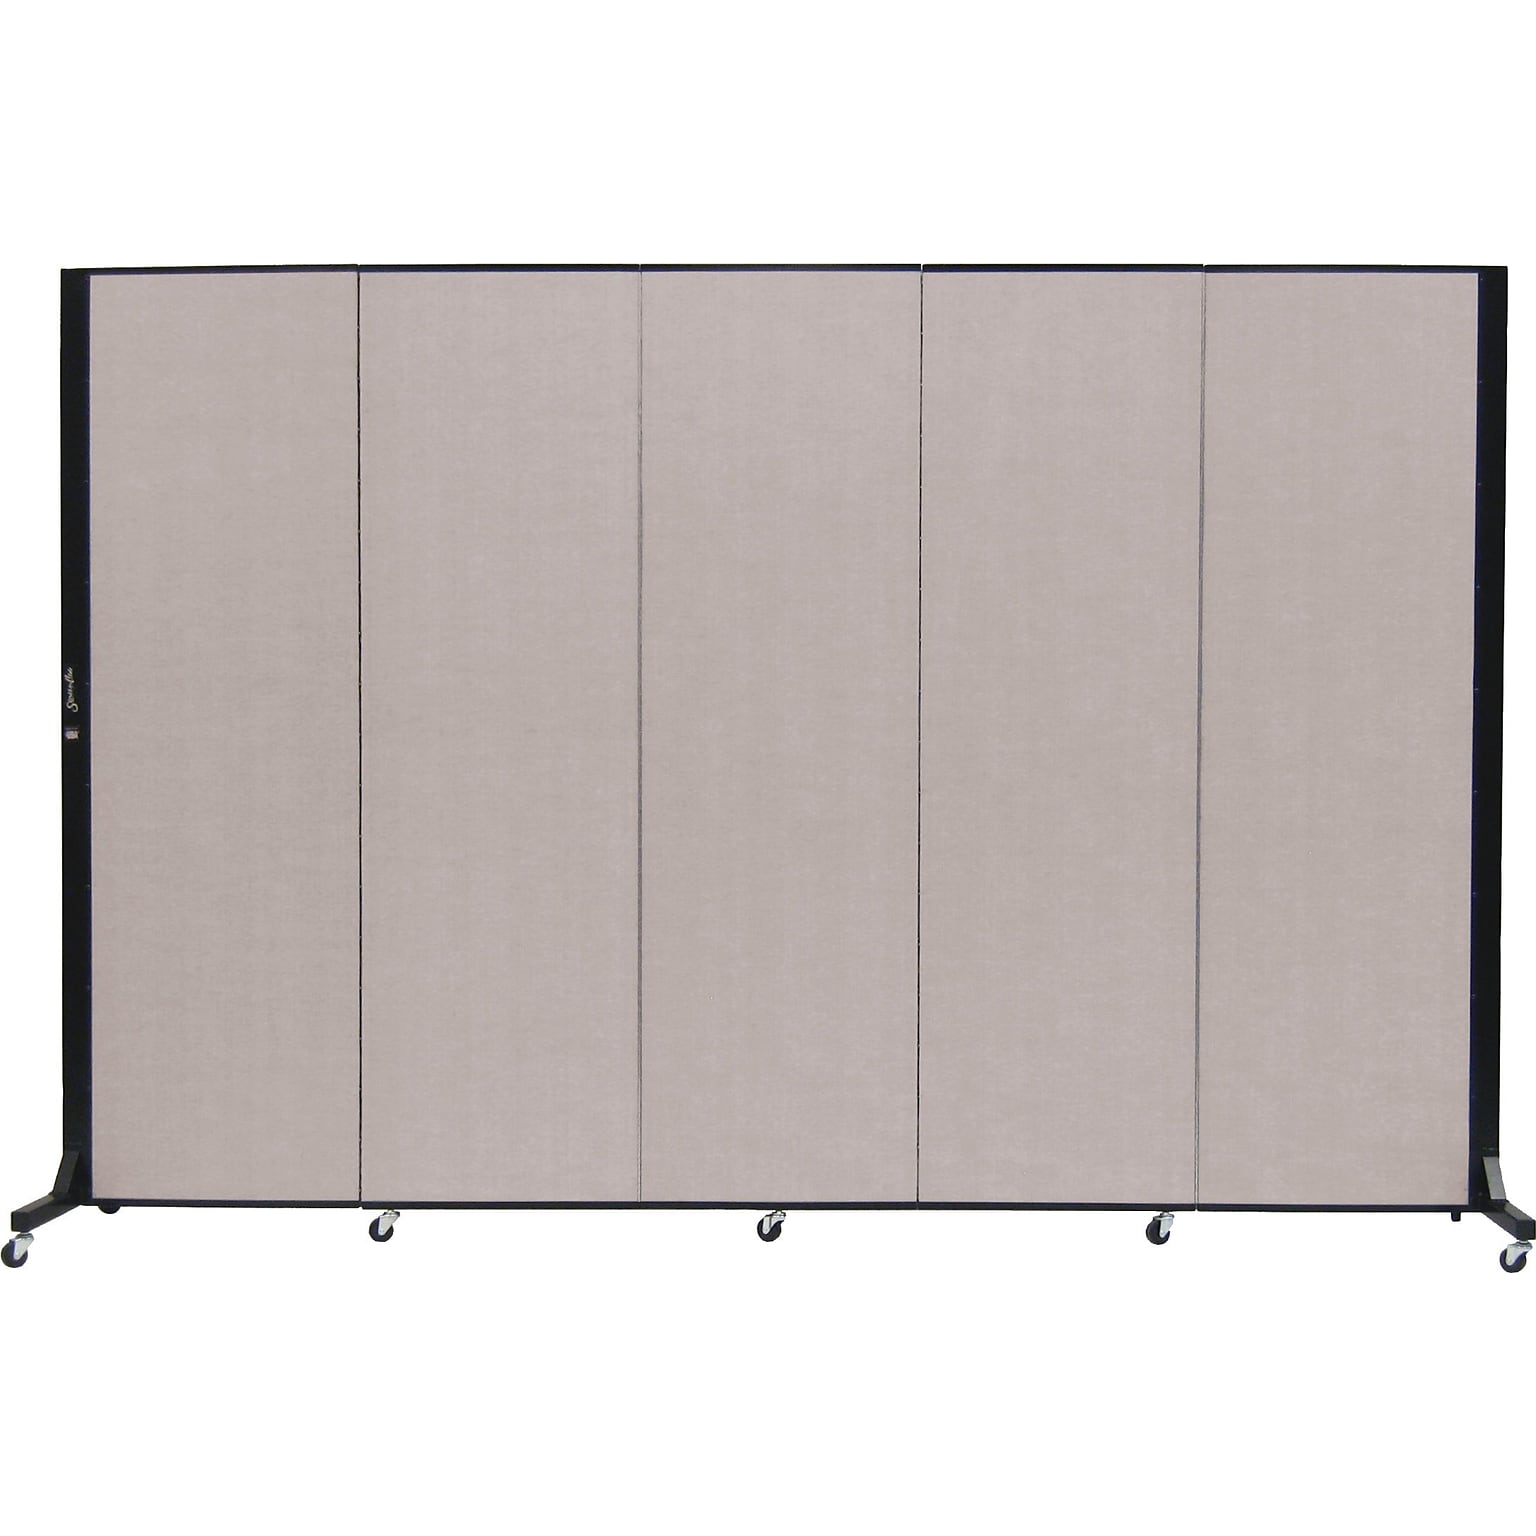 Screenflex Portable Room Divider, Light Gray Fabric/Light Gray Frame, 6 x 9, 5 Panels